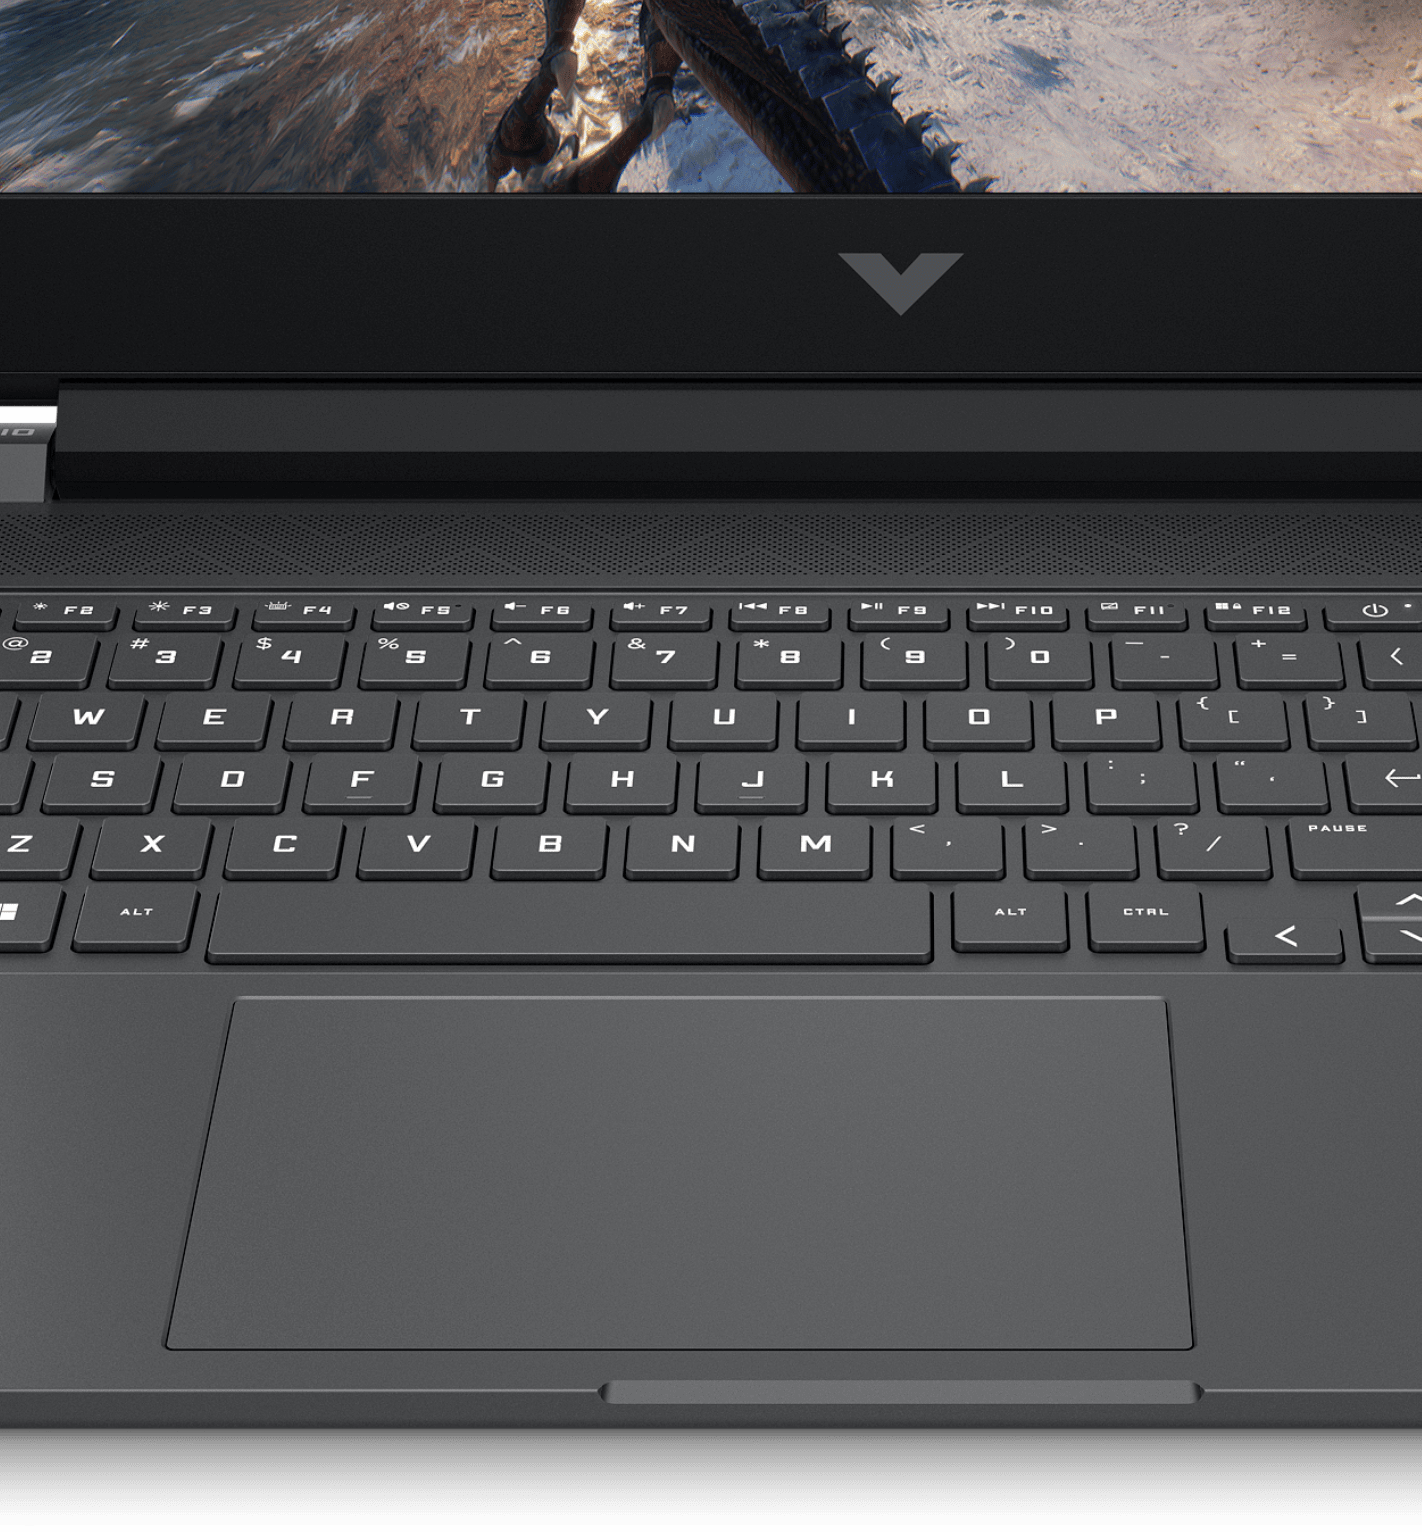 VCTUS 15 Laptop trackpad detail